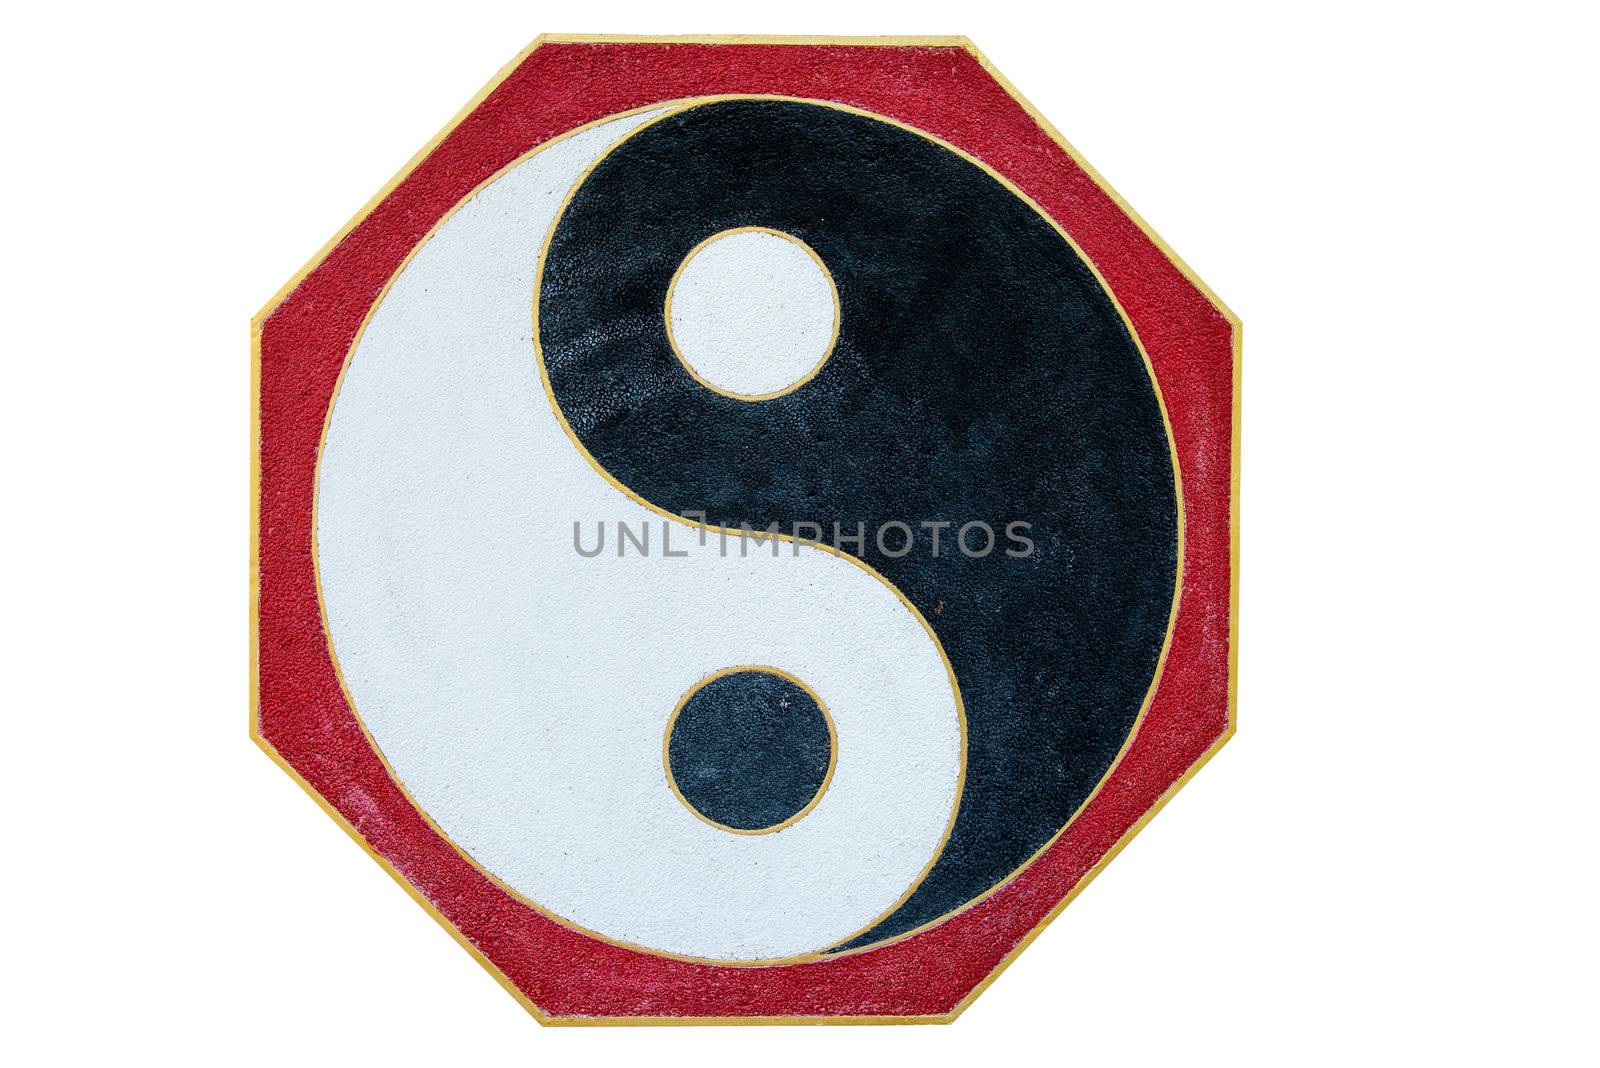 Chinese Yin Yang sign and symbol by sasilsolutions